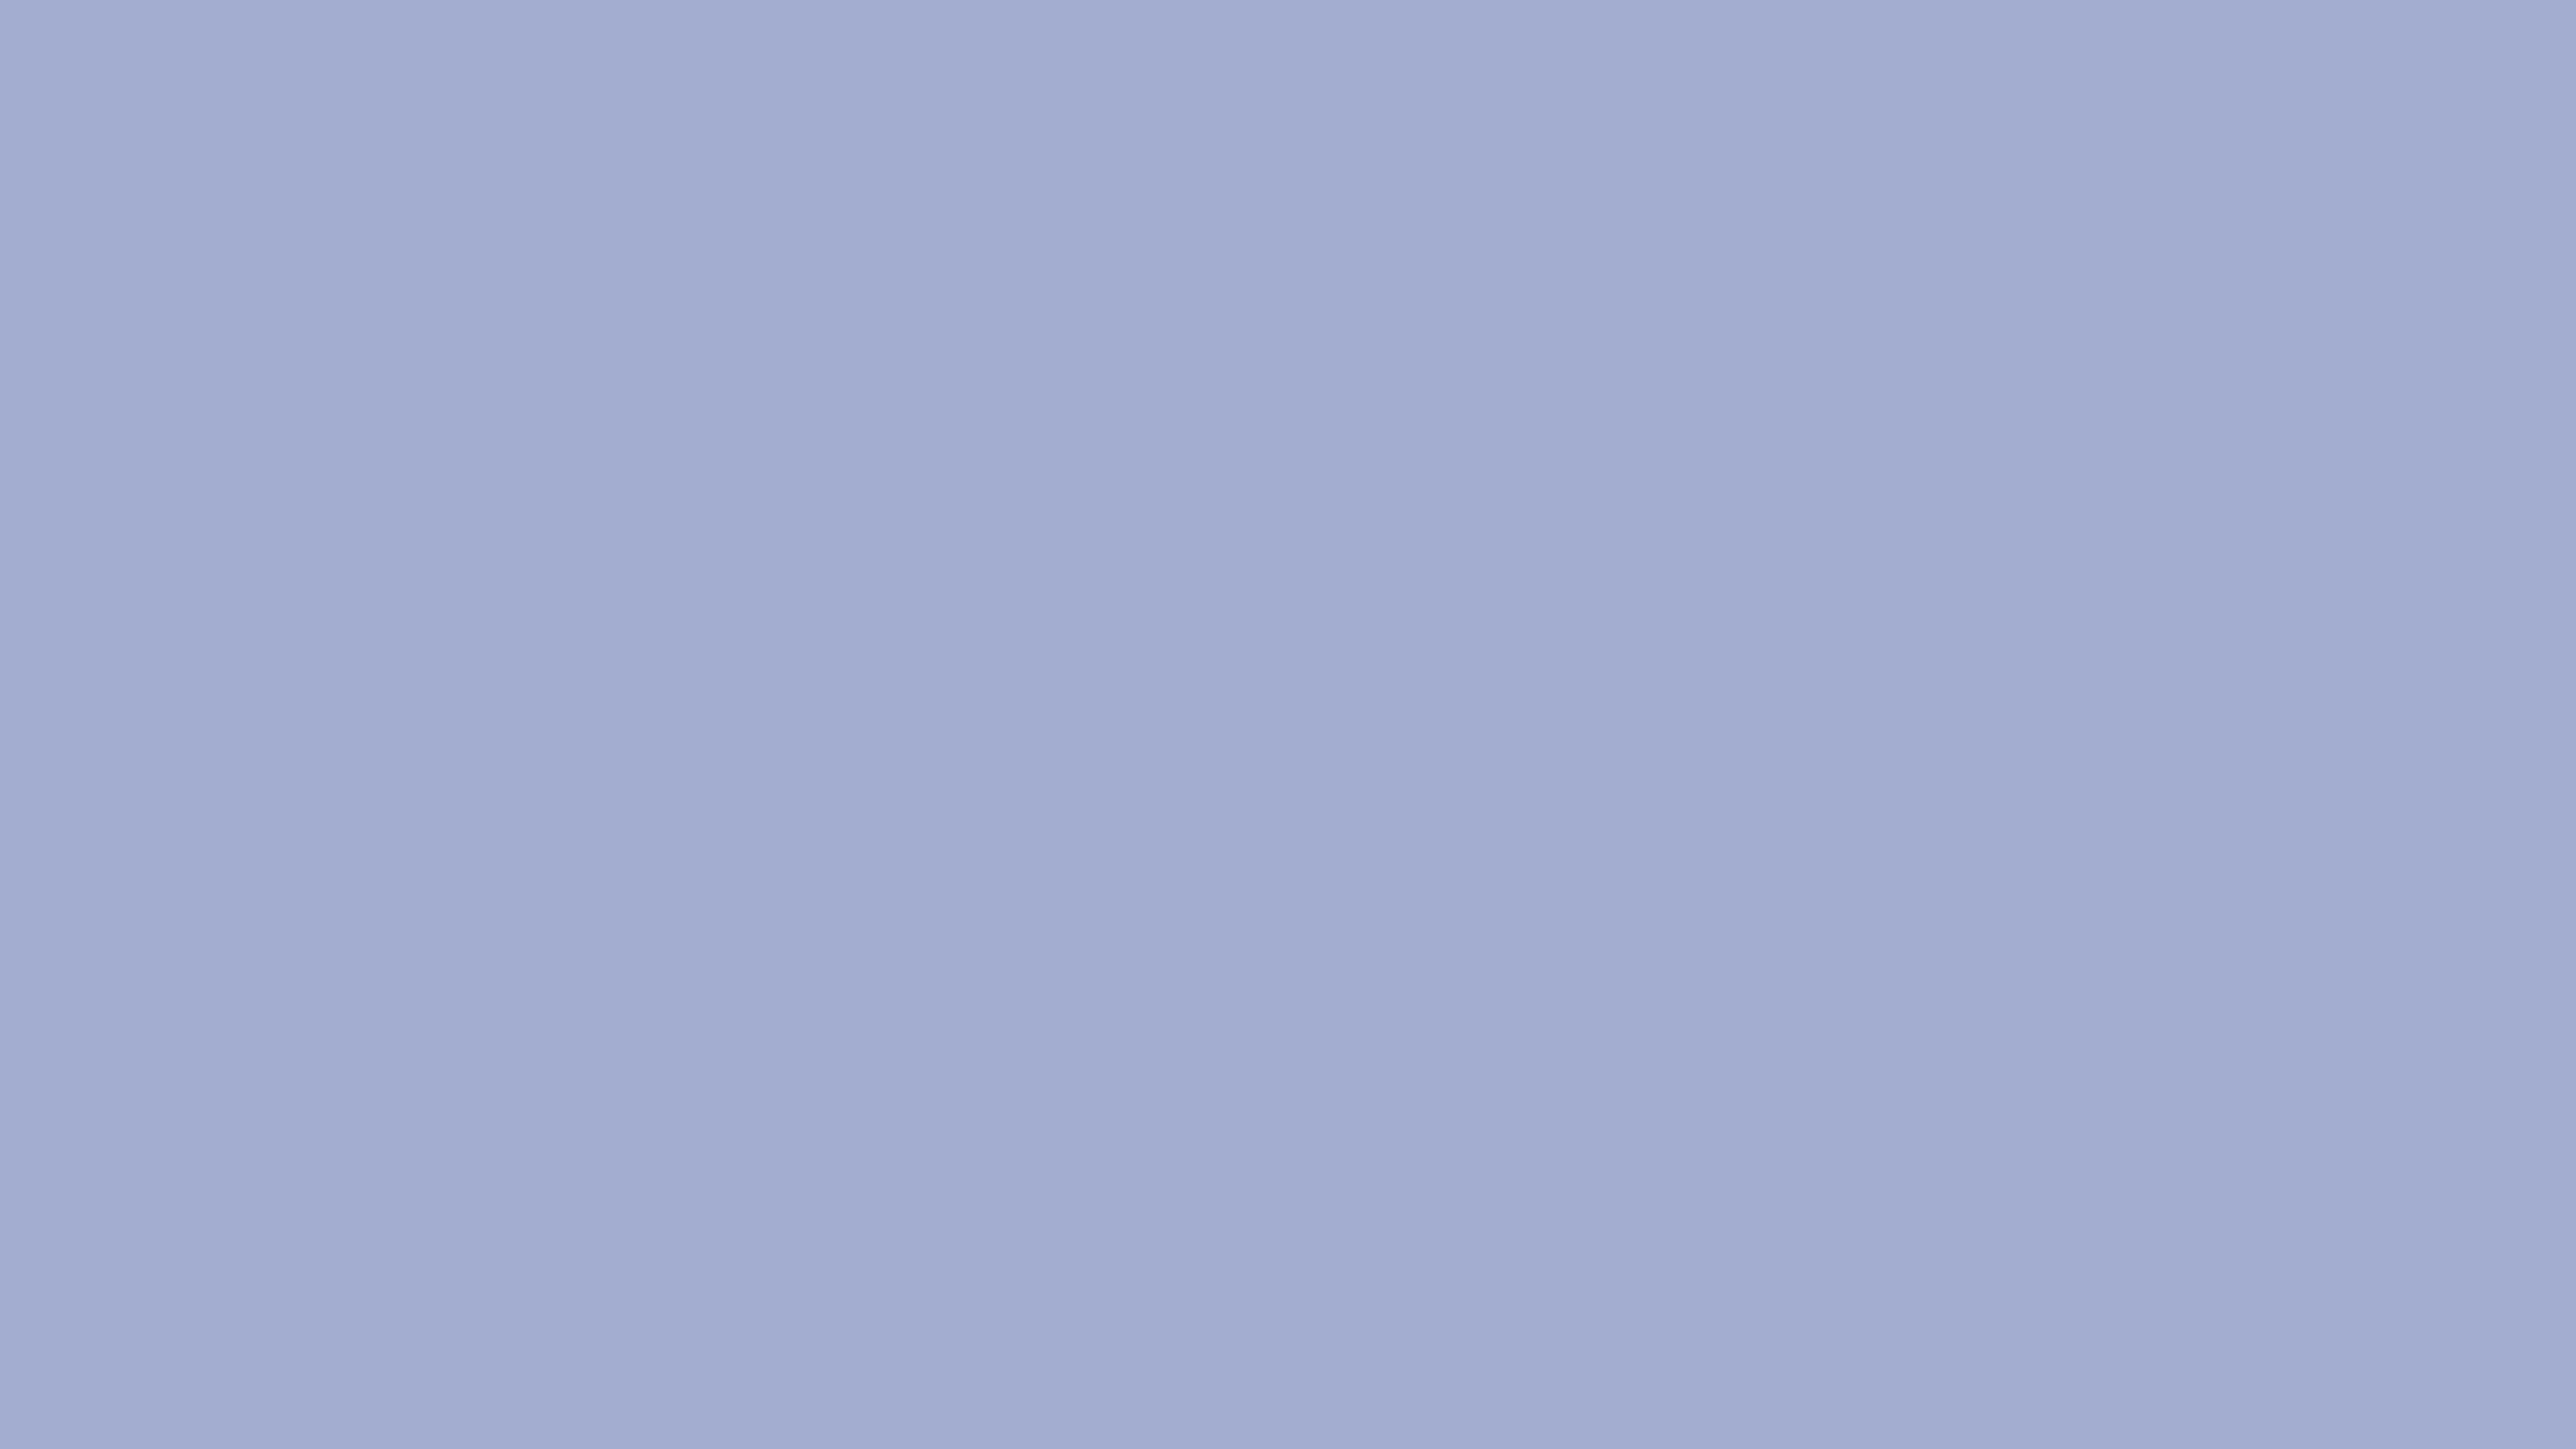 3840x2160 Wild Blue Yonder Solid Color Background